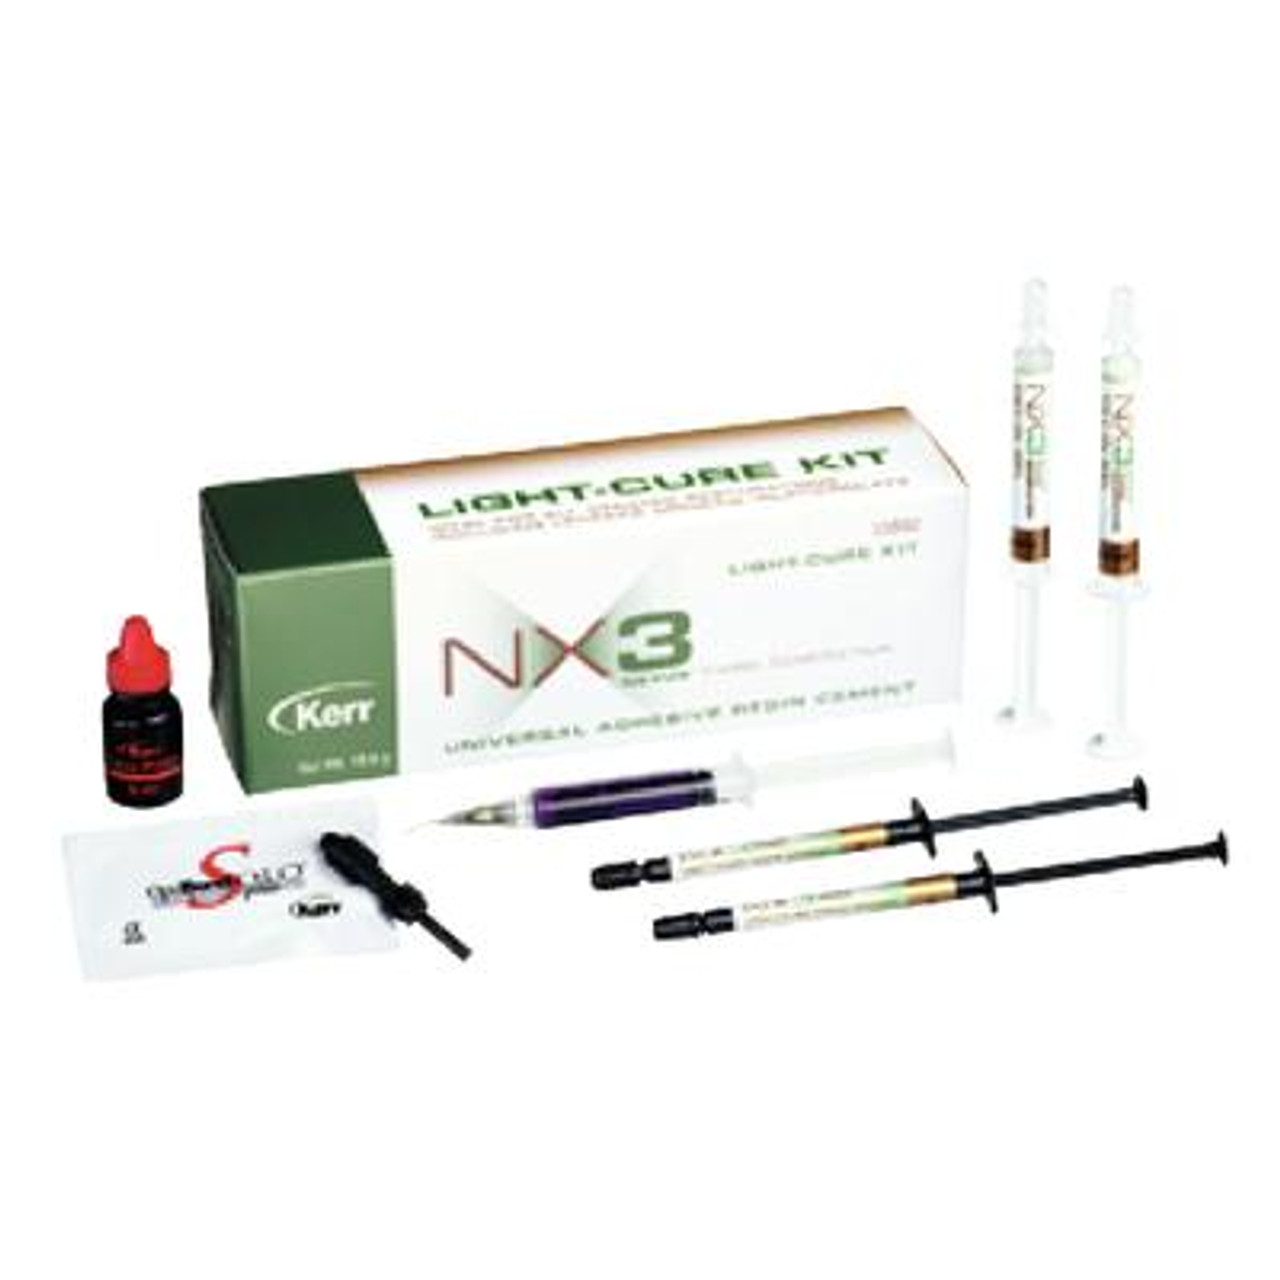 Kerr NX3 Nexus Permanent Cement Light-Cure Kit